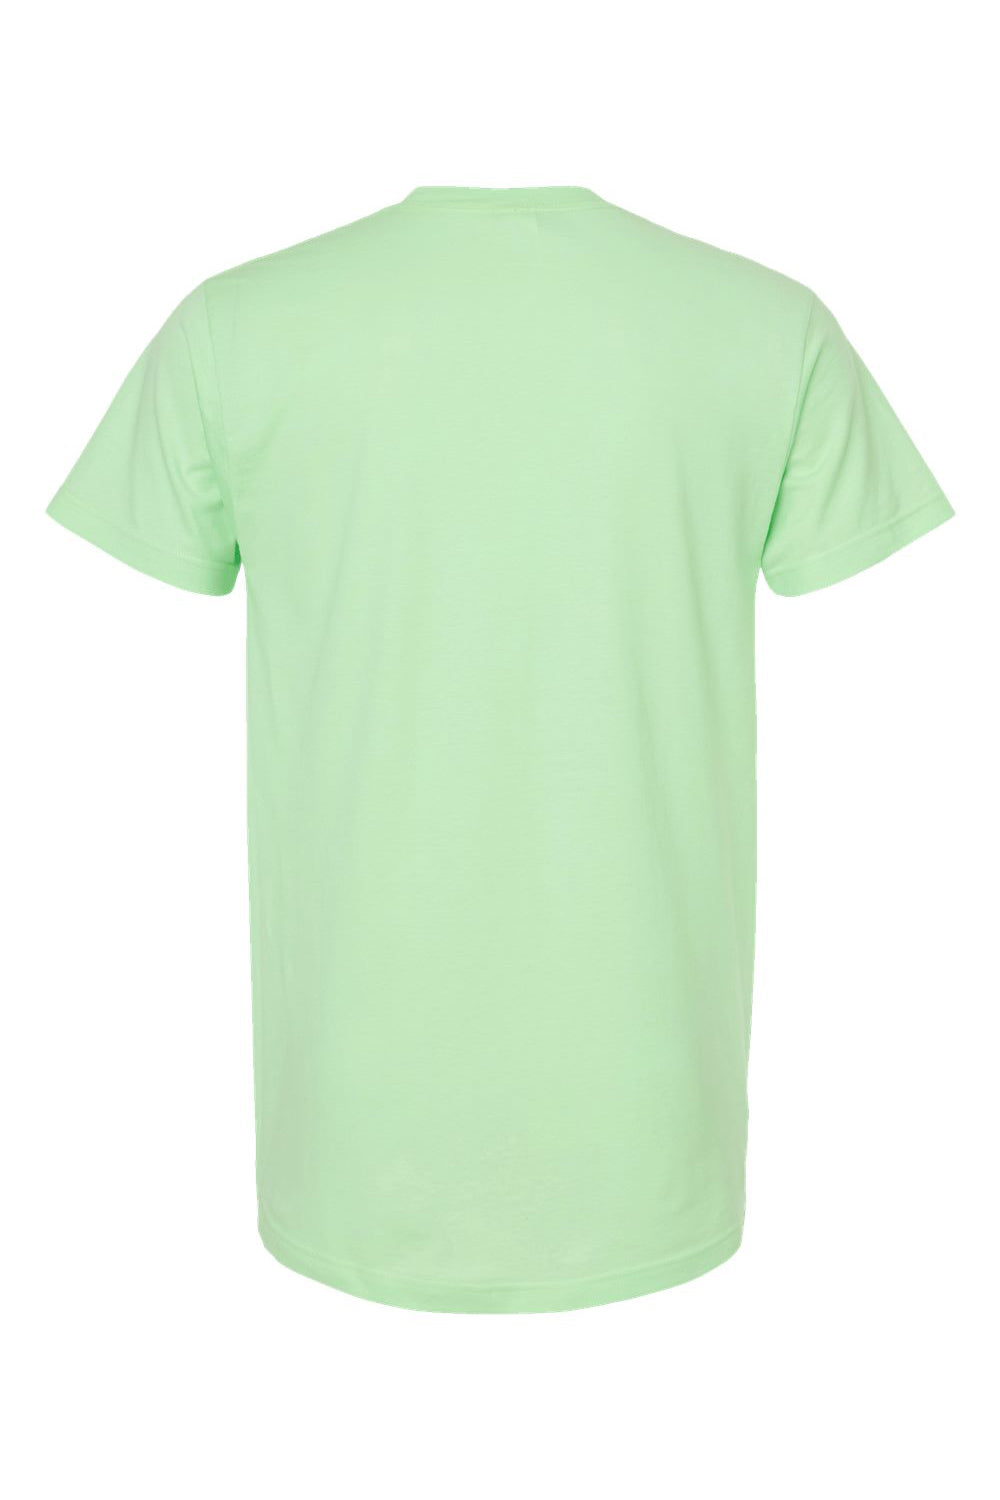 Tultex 202 Mens Fine Jersey Short Sleeve Crewneck T-Shirt Neo Mint Green Flat Back